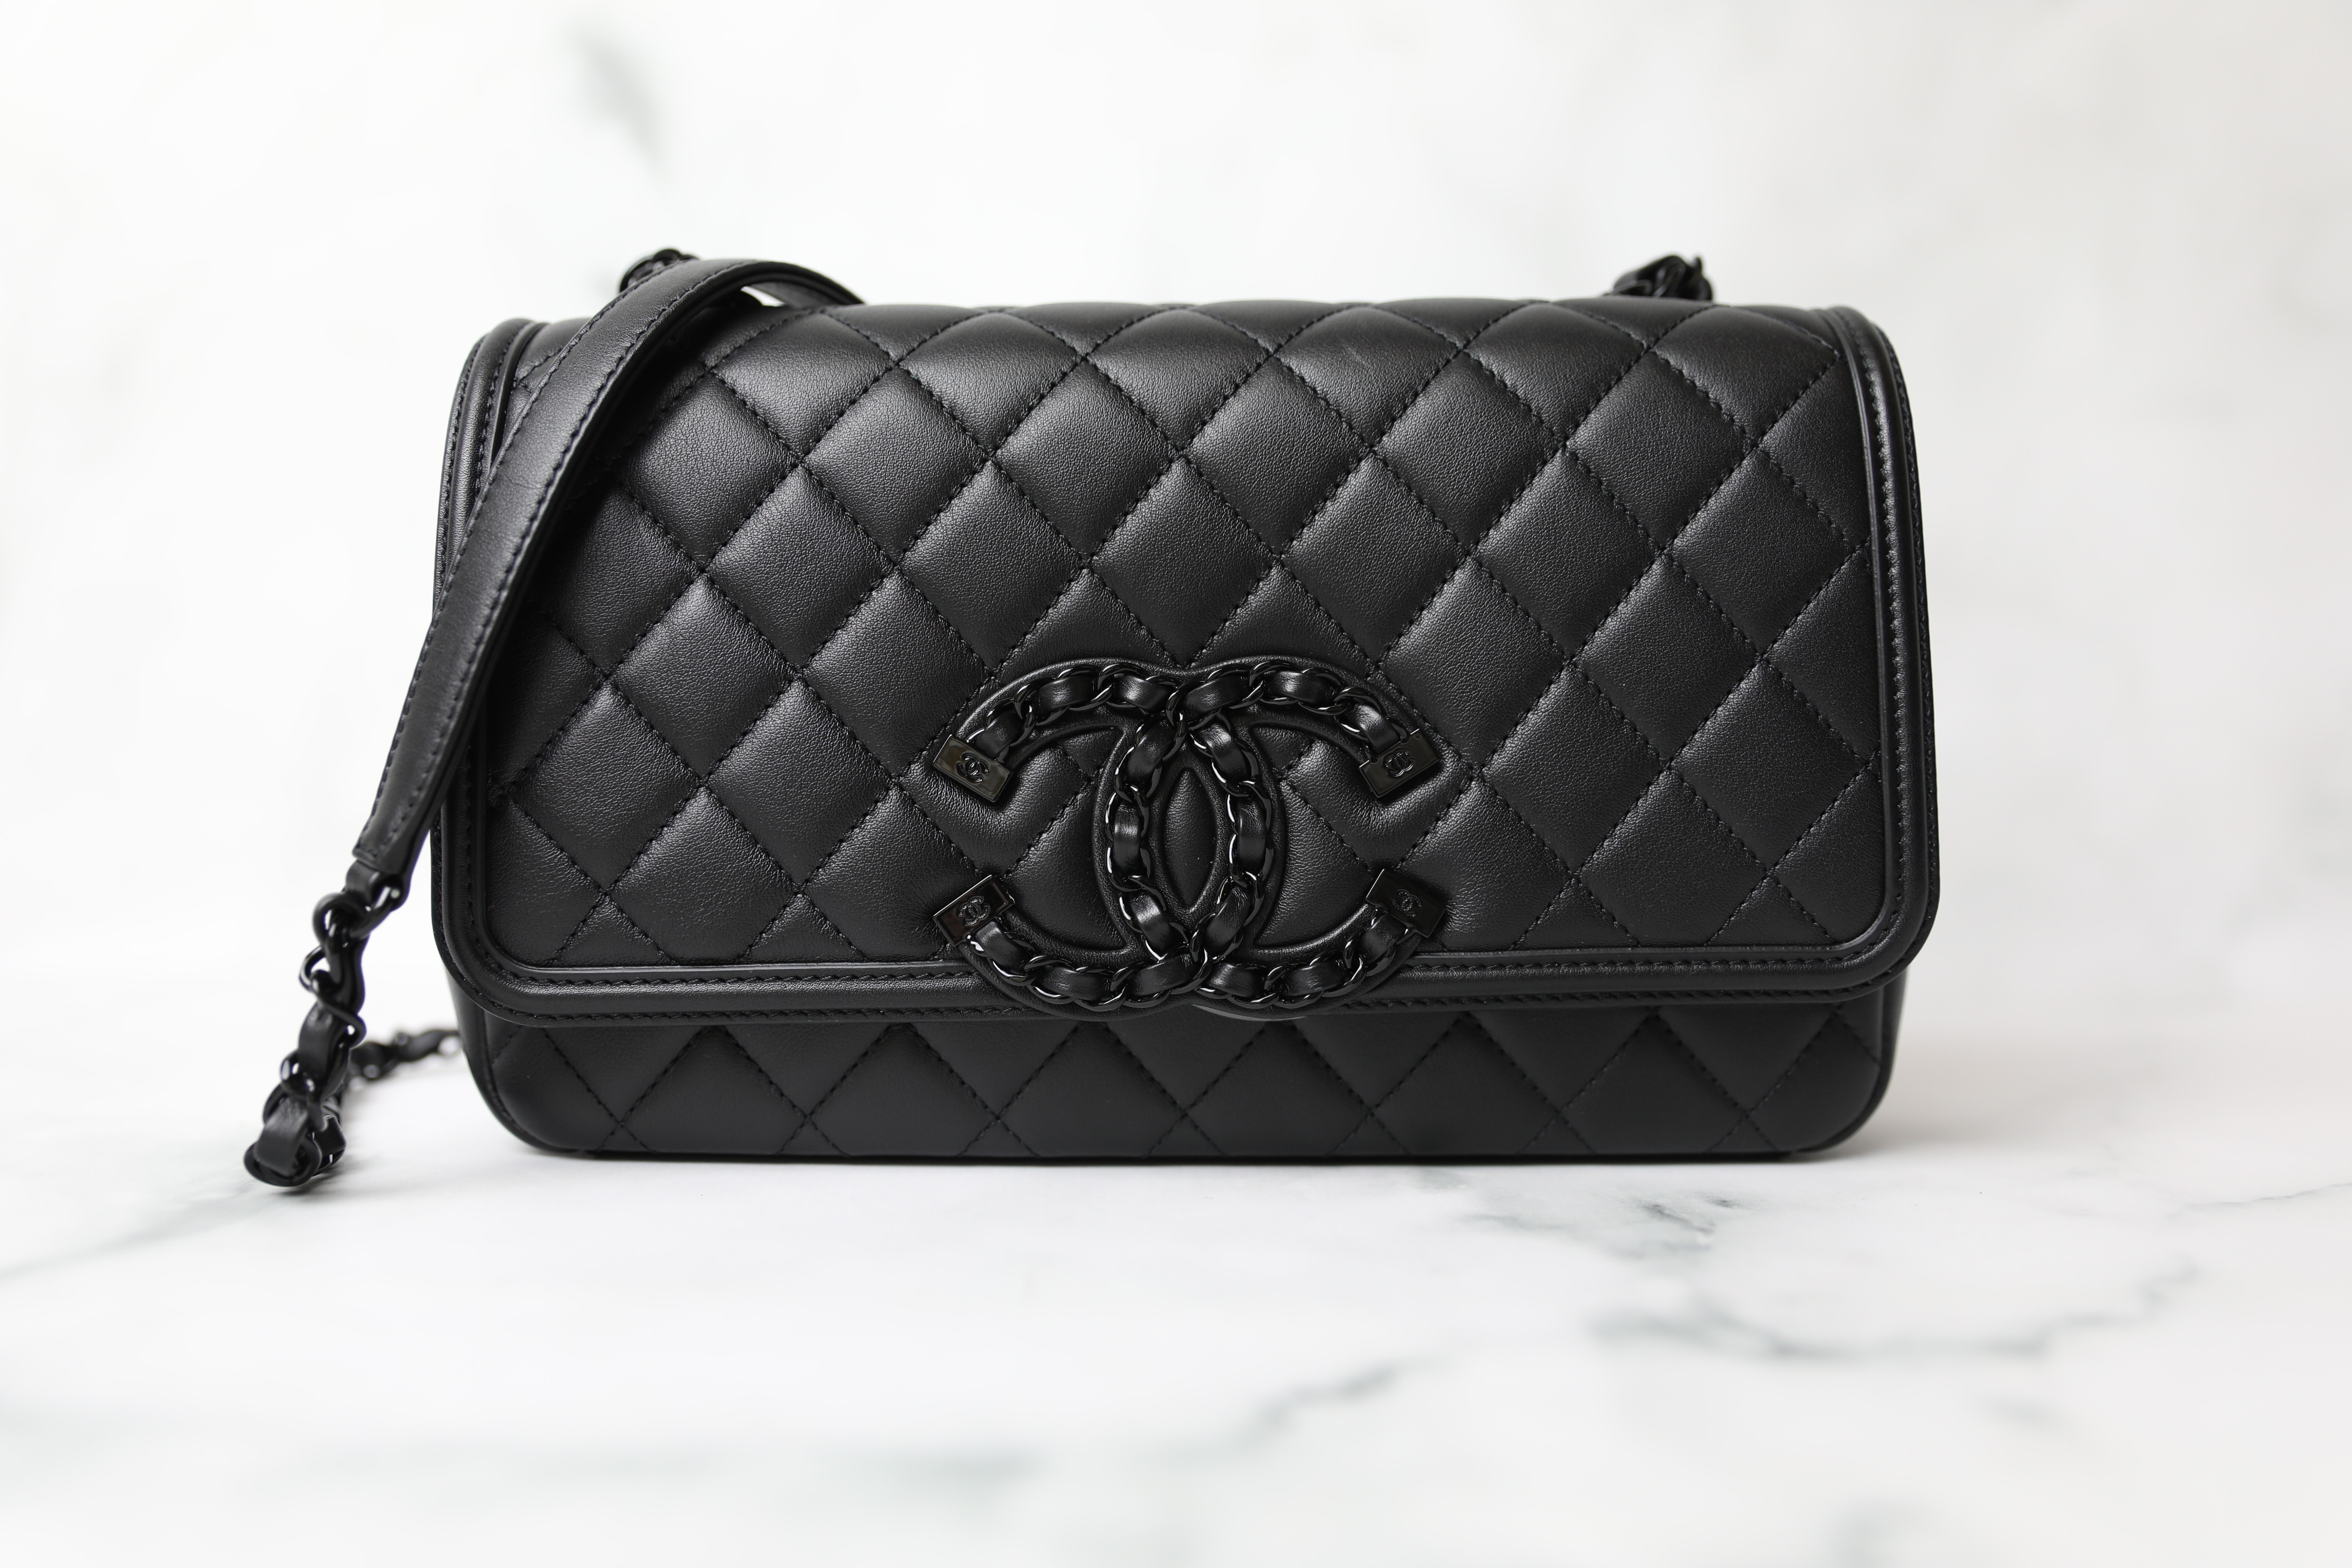 Chanel Filigree Medium So Black Flap Bag, New in Box - Julia Rose